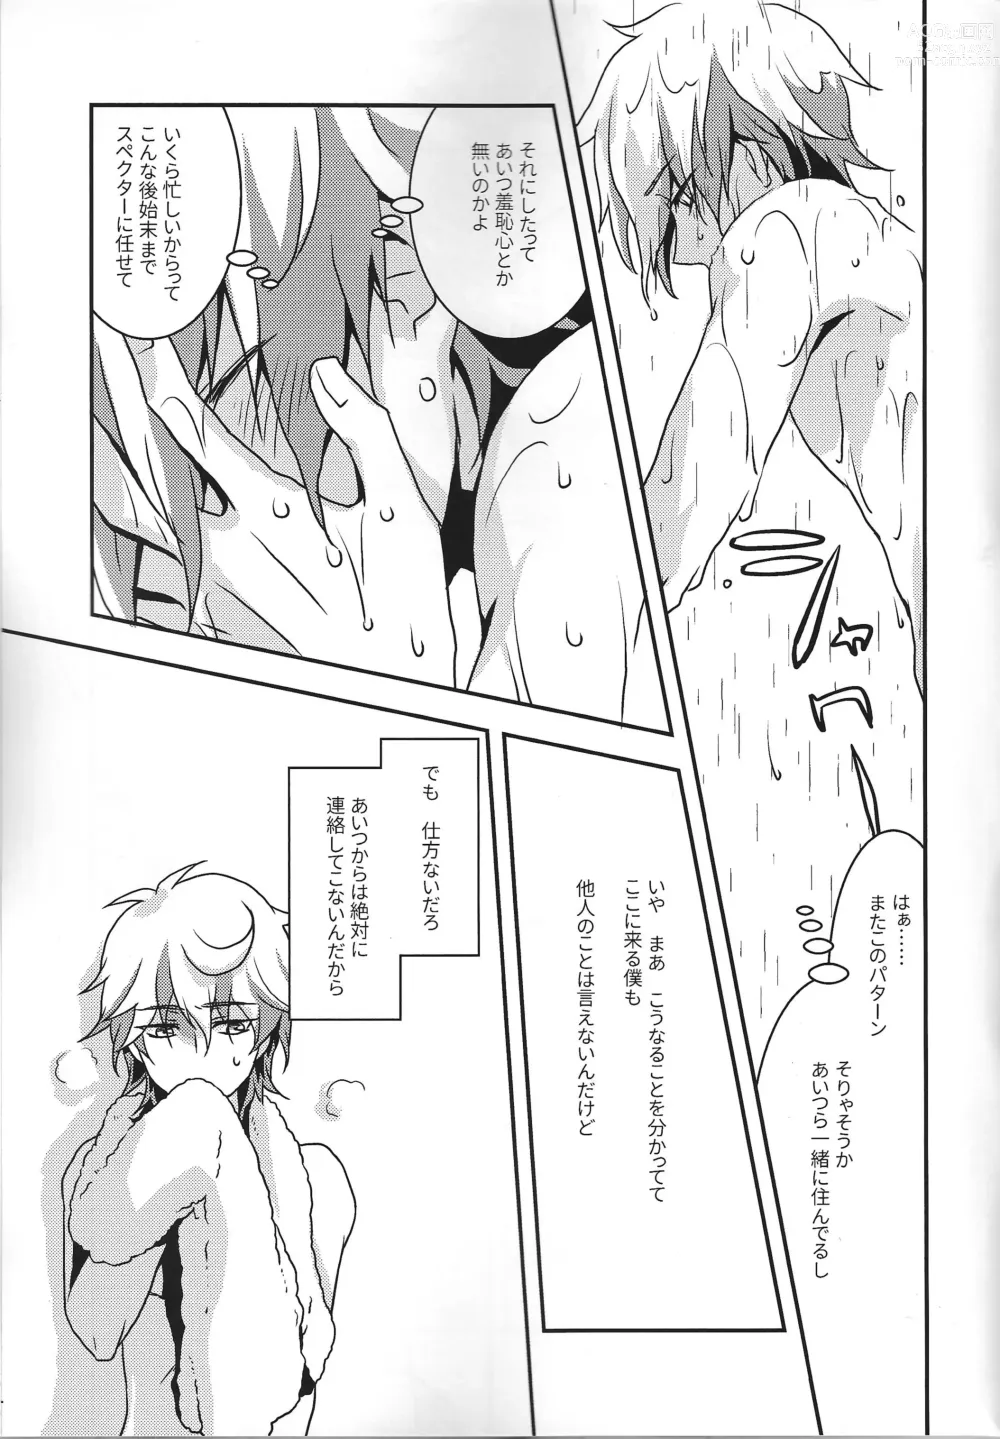 Page 6 of doujinshi Na o Yobu Koe